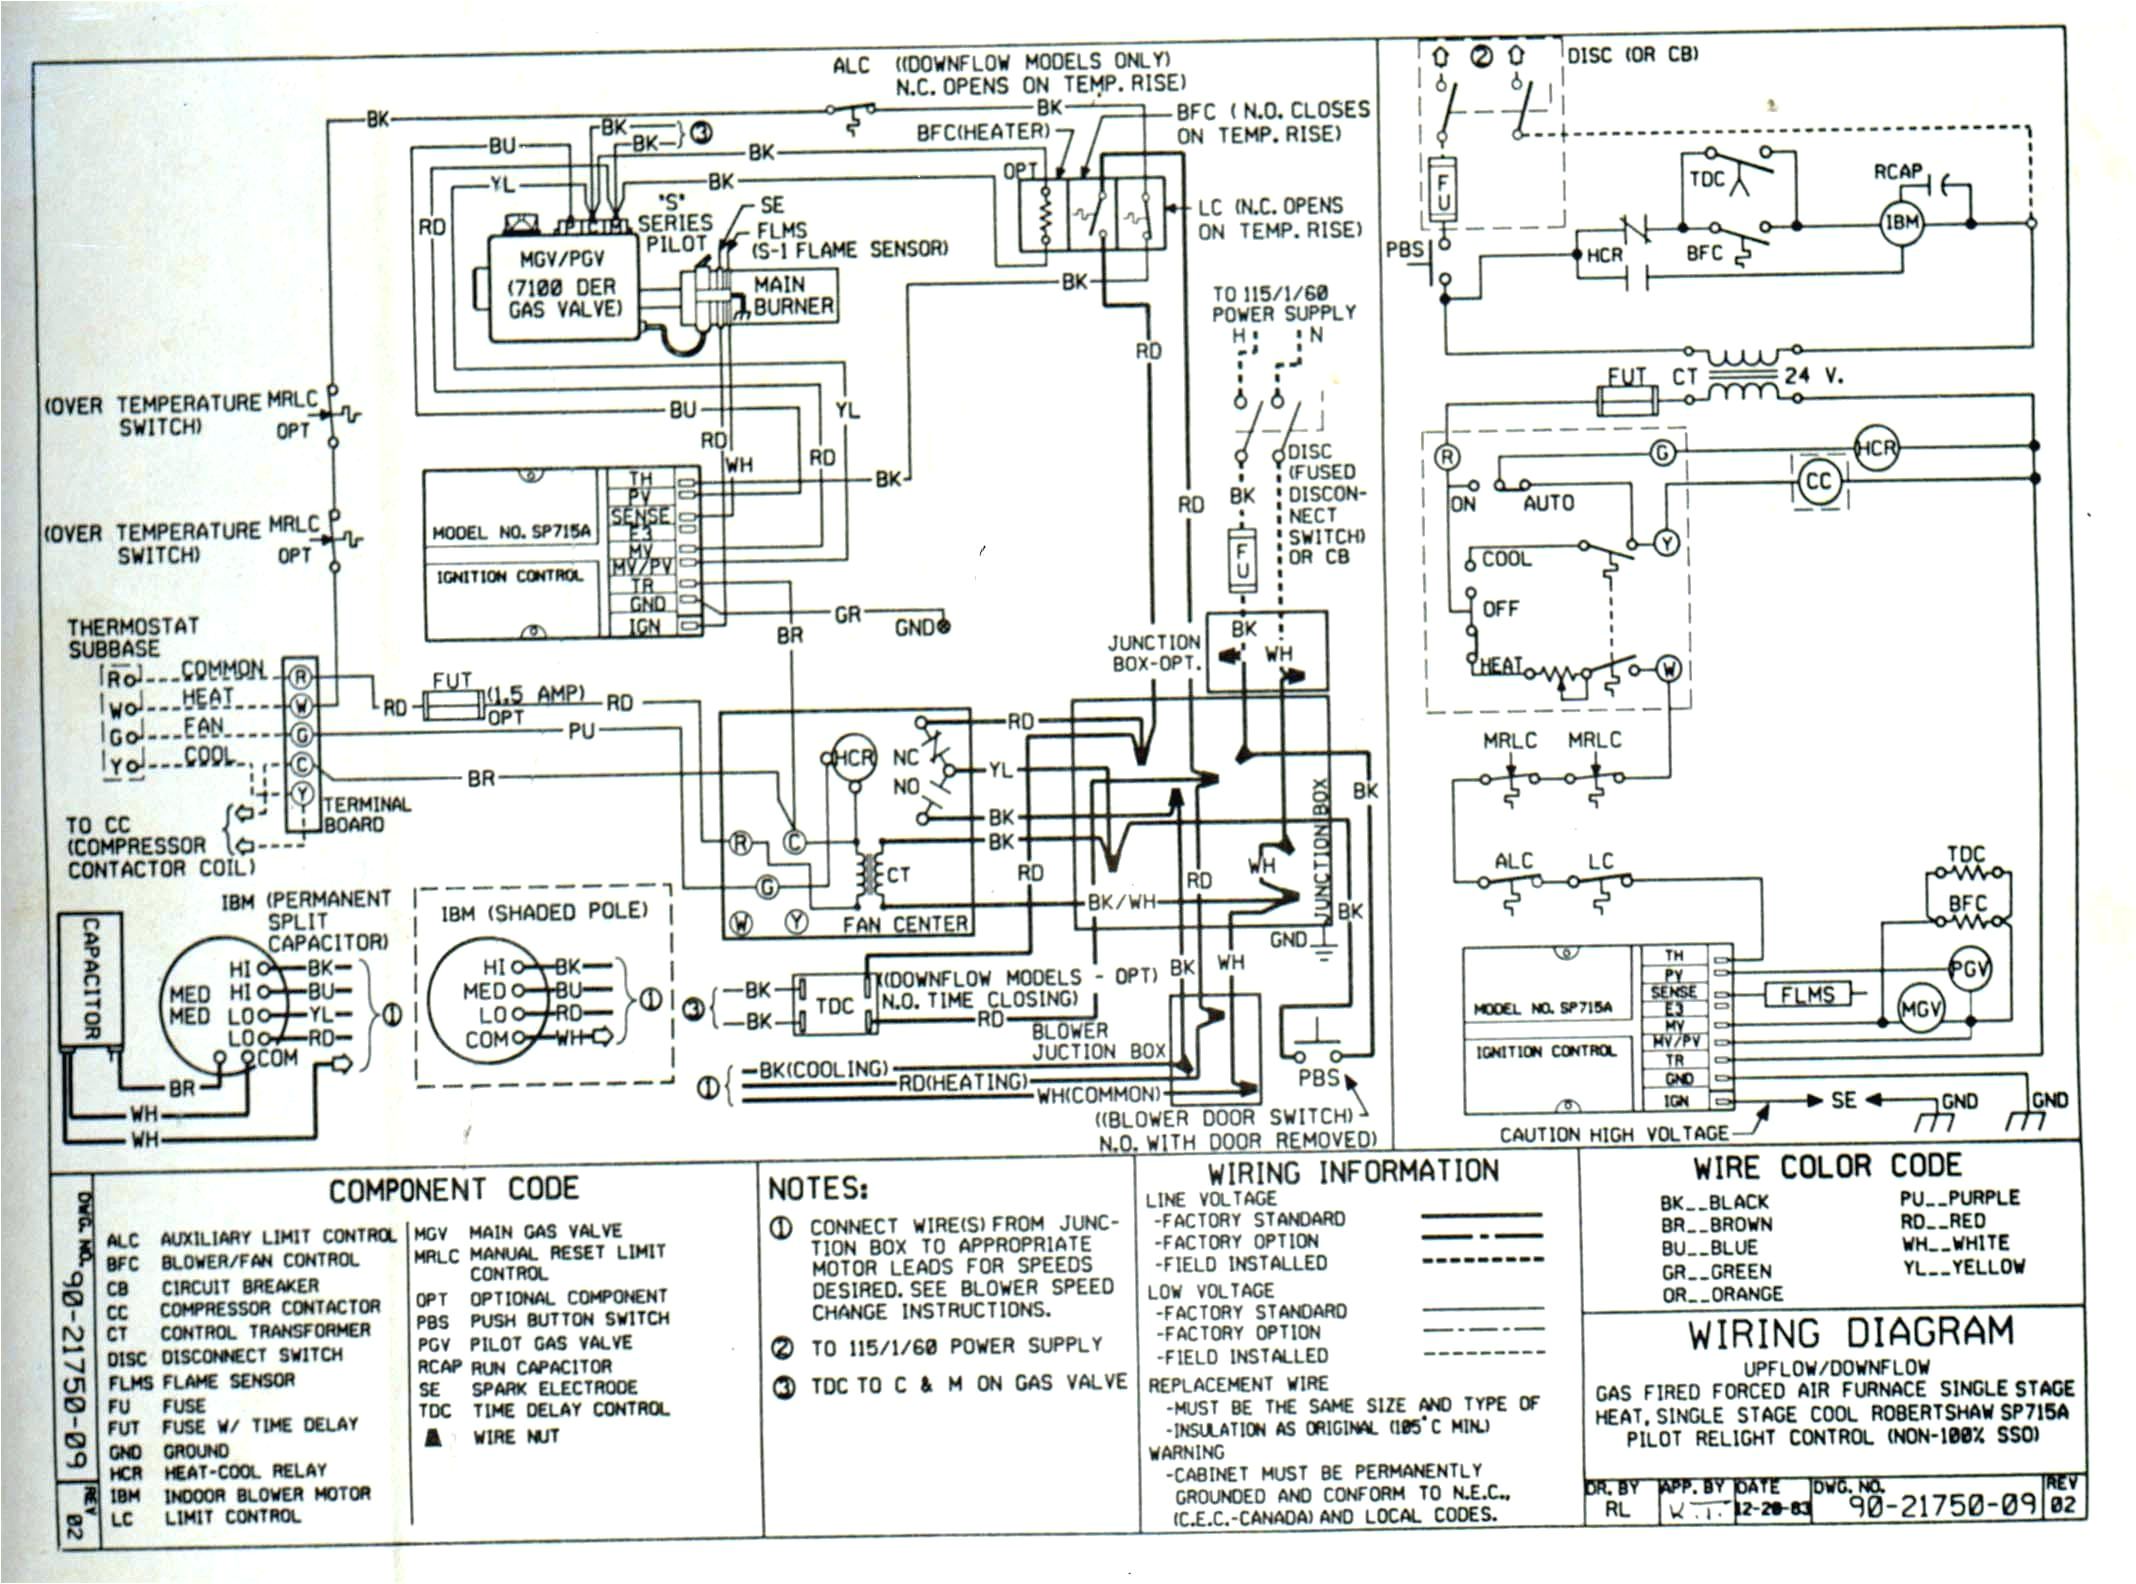 payne package unit wiring diagram payne package unit wiring diagram new trane air handler wiring diagram quot 6f jpg